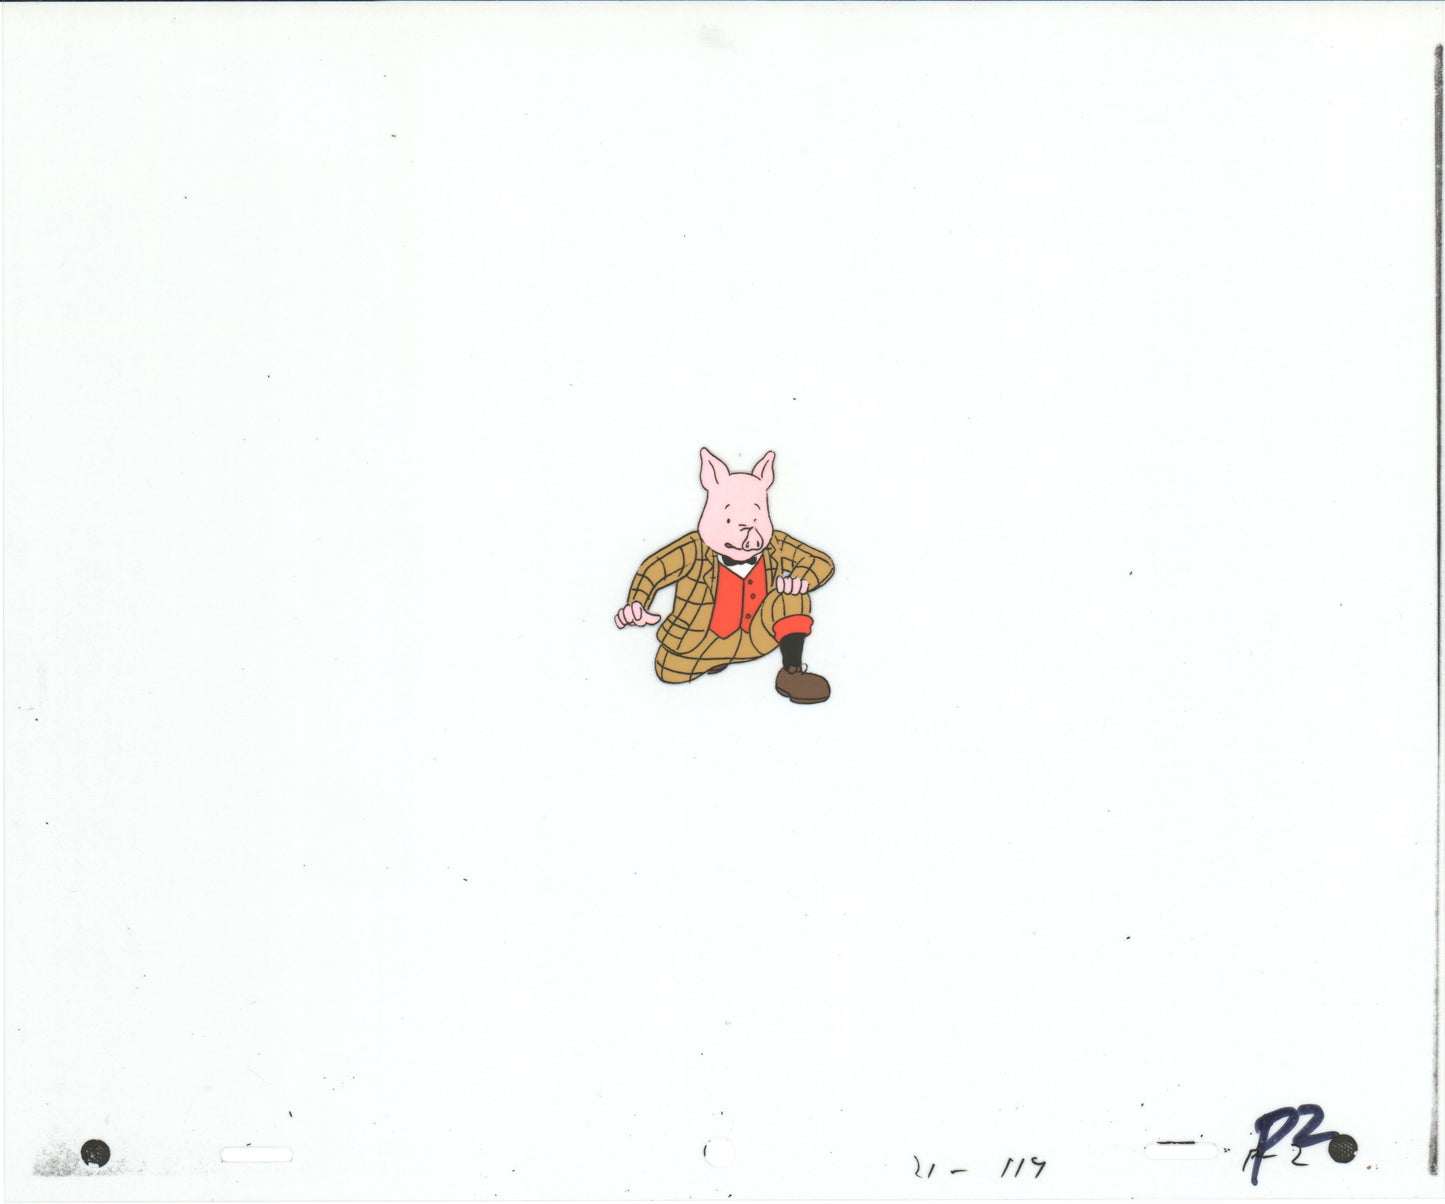 RUPERT Bear Podgy Pig Original Production Animation Cel from the Cartoon by Nelvana Tourtel Animation 1990s 8-337